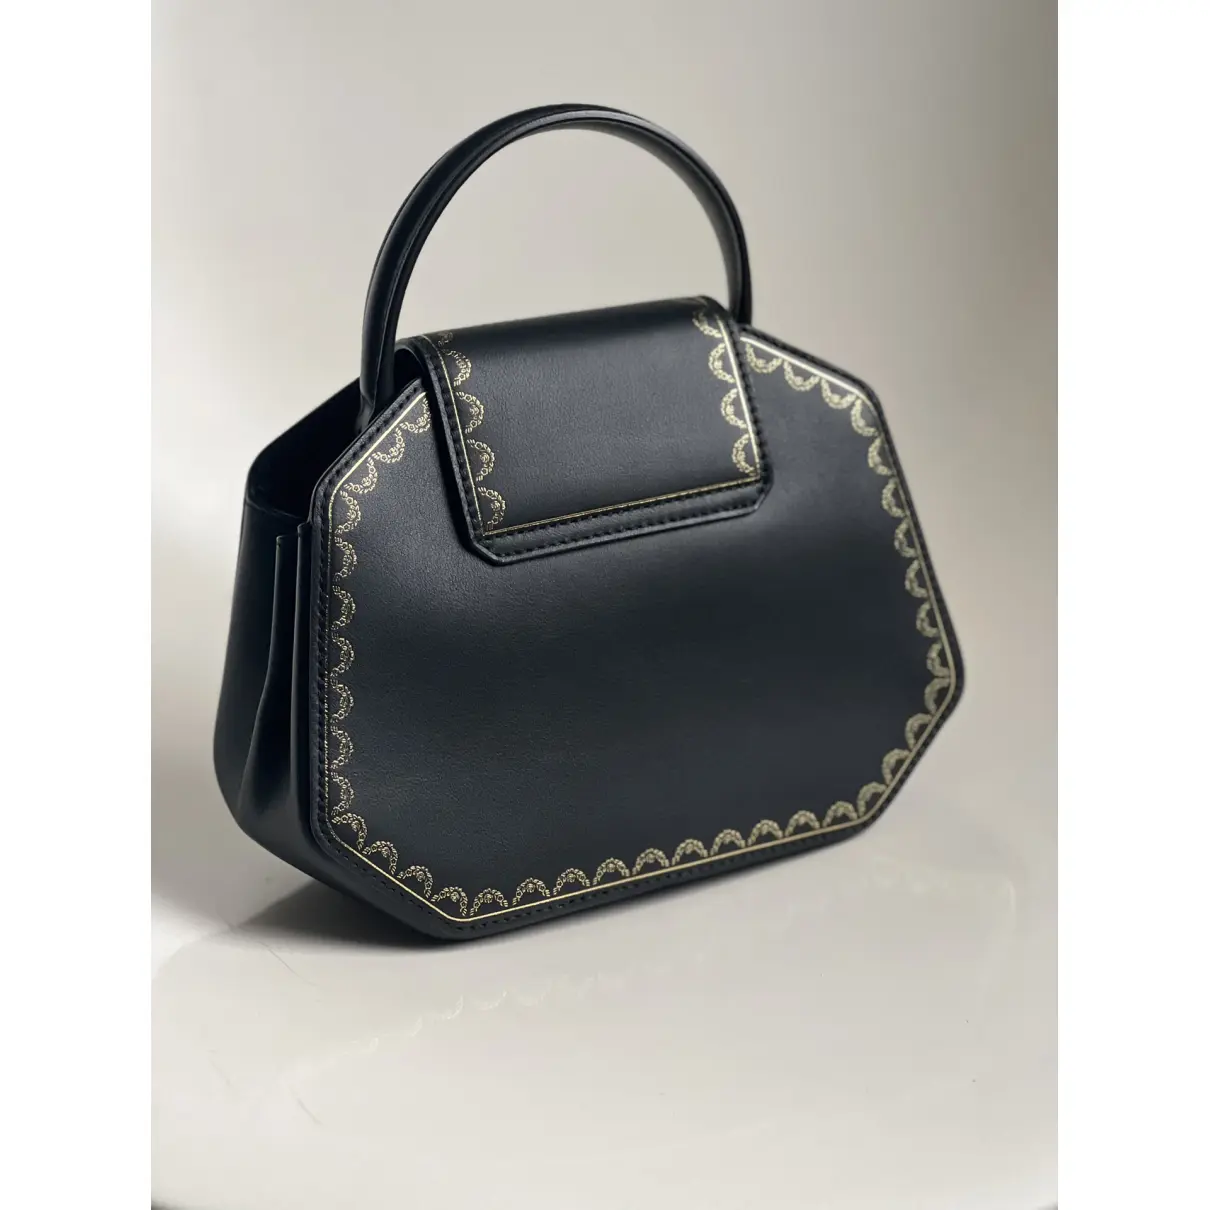 Buy Cartier Guirlande leather mini bag online